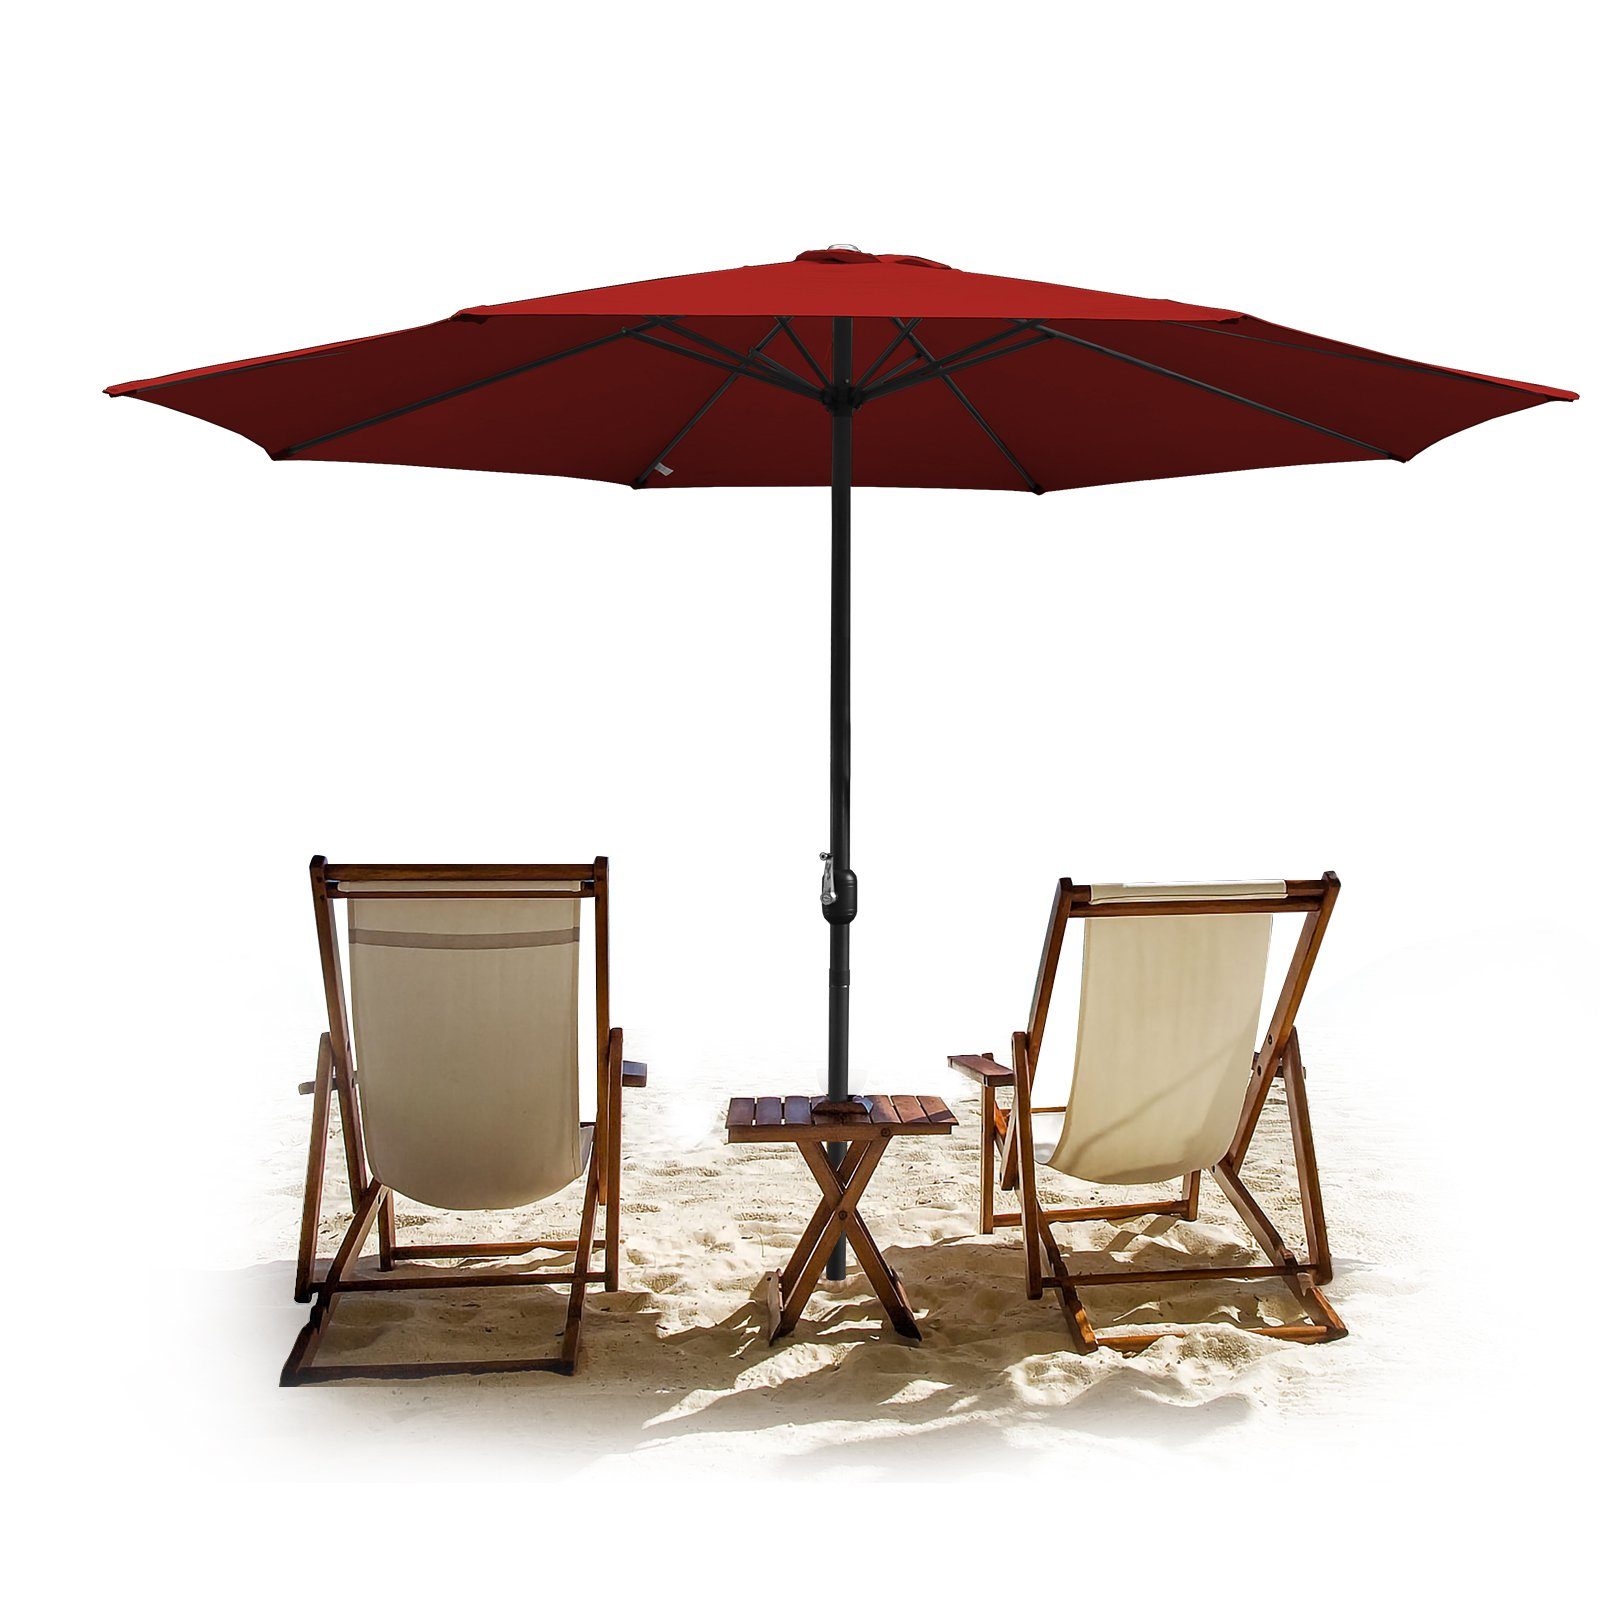 Clanmacy Sonnenschirm 3m-3.5m Sonnenschirm Marktschirm mit Handkurbel UV40+ Outdoor-Schirm Terrassen Gartenschirm